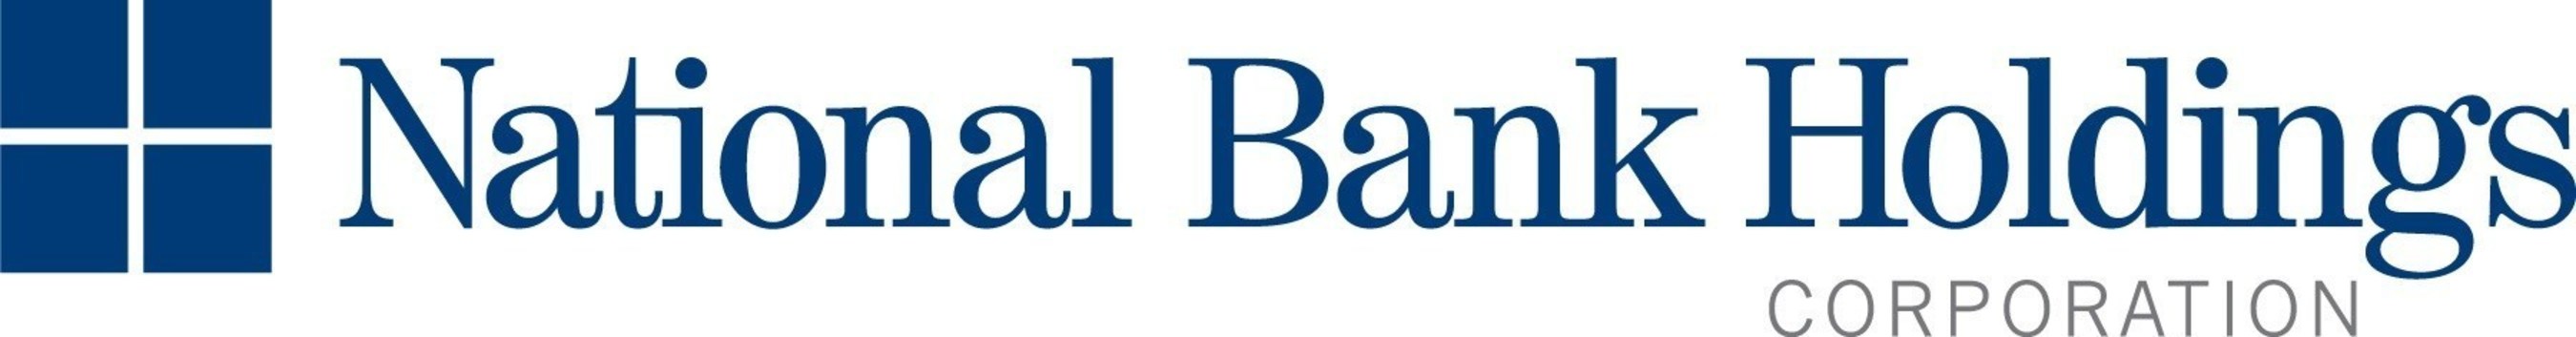 National Bank Holdings Corporation Logo